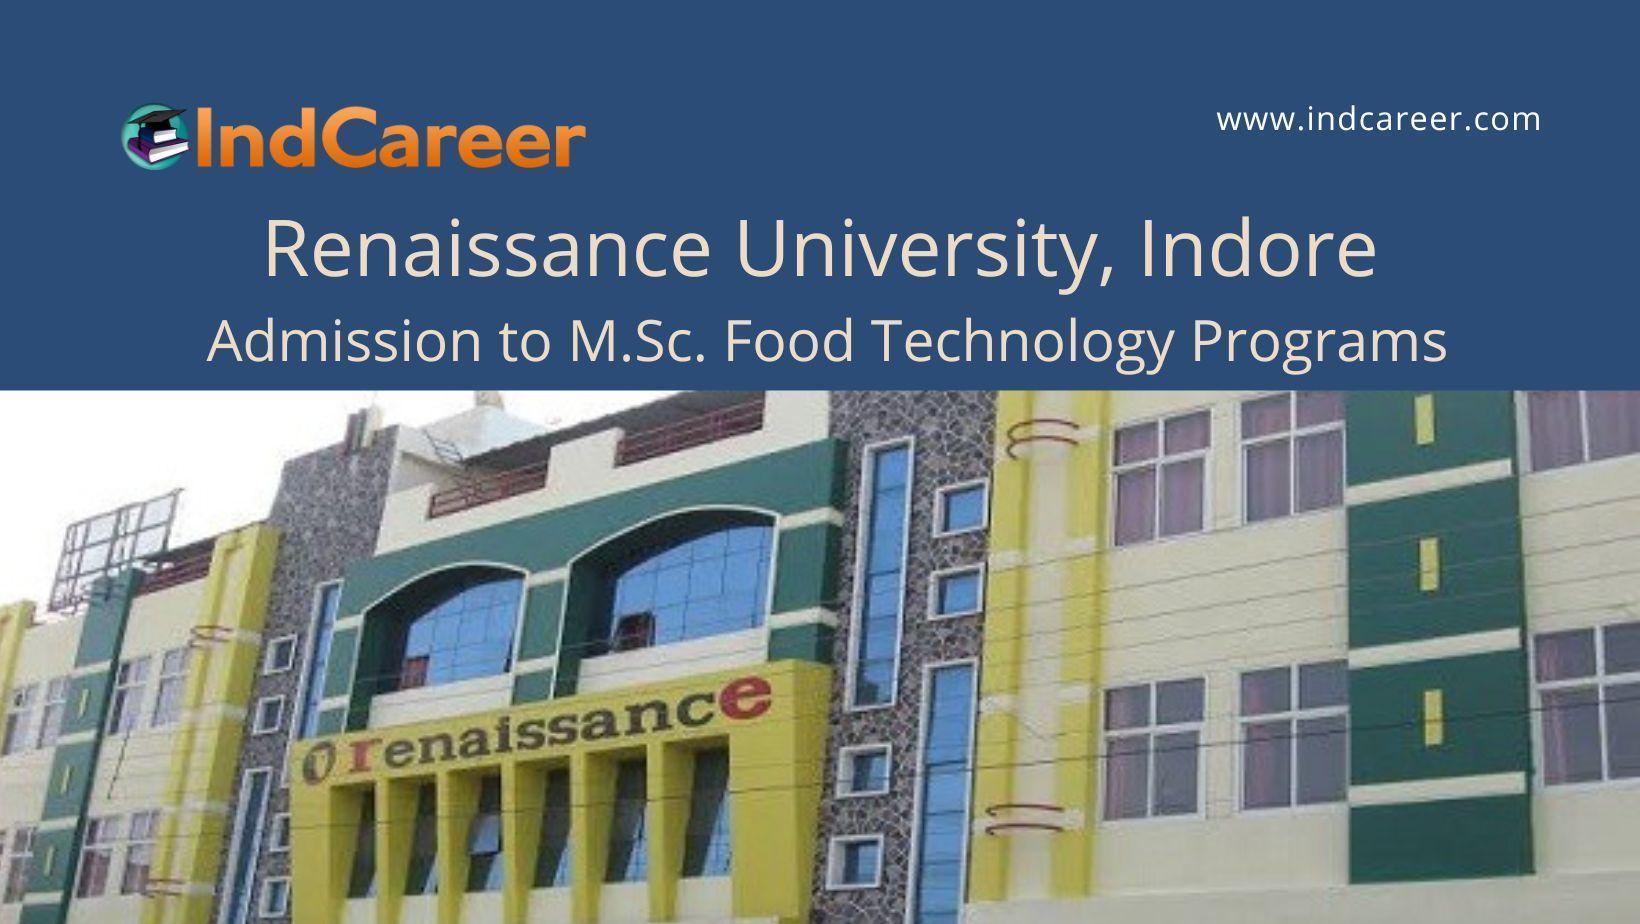 Renaissance University, Indore M.Sc. Food Technology Admission IndCareer